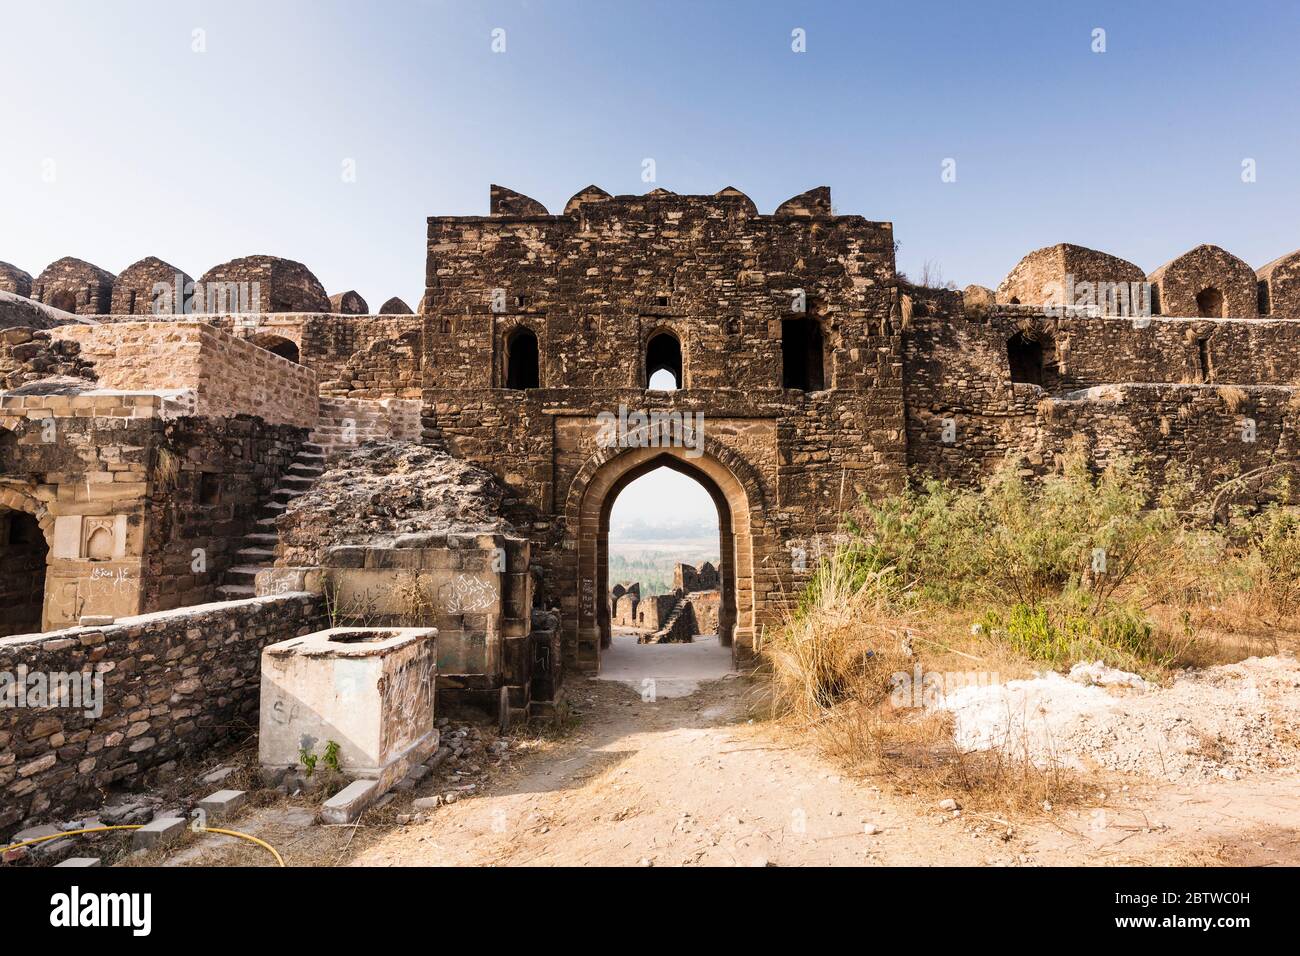 Rohtas Fort, Gate, Jhelum District, Punjab Province, Pakistan, South Asia, Asia Stock Photo